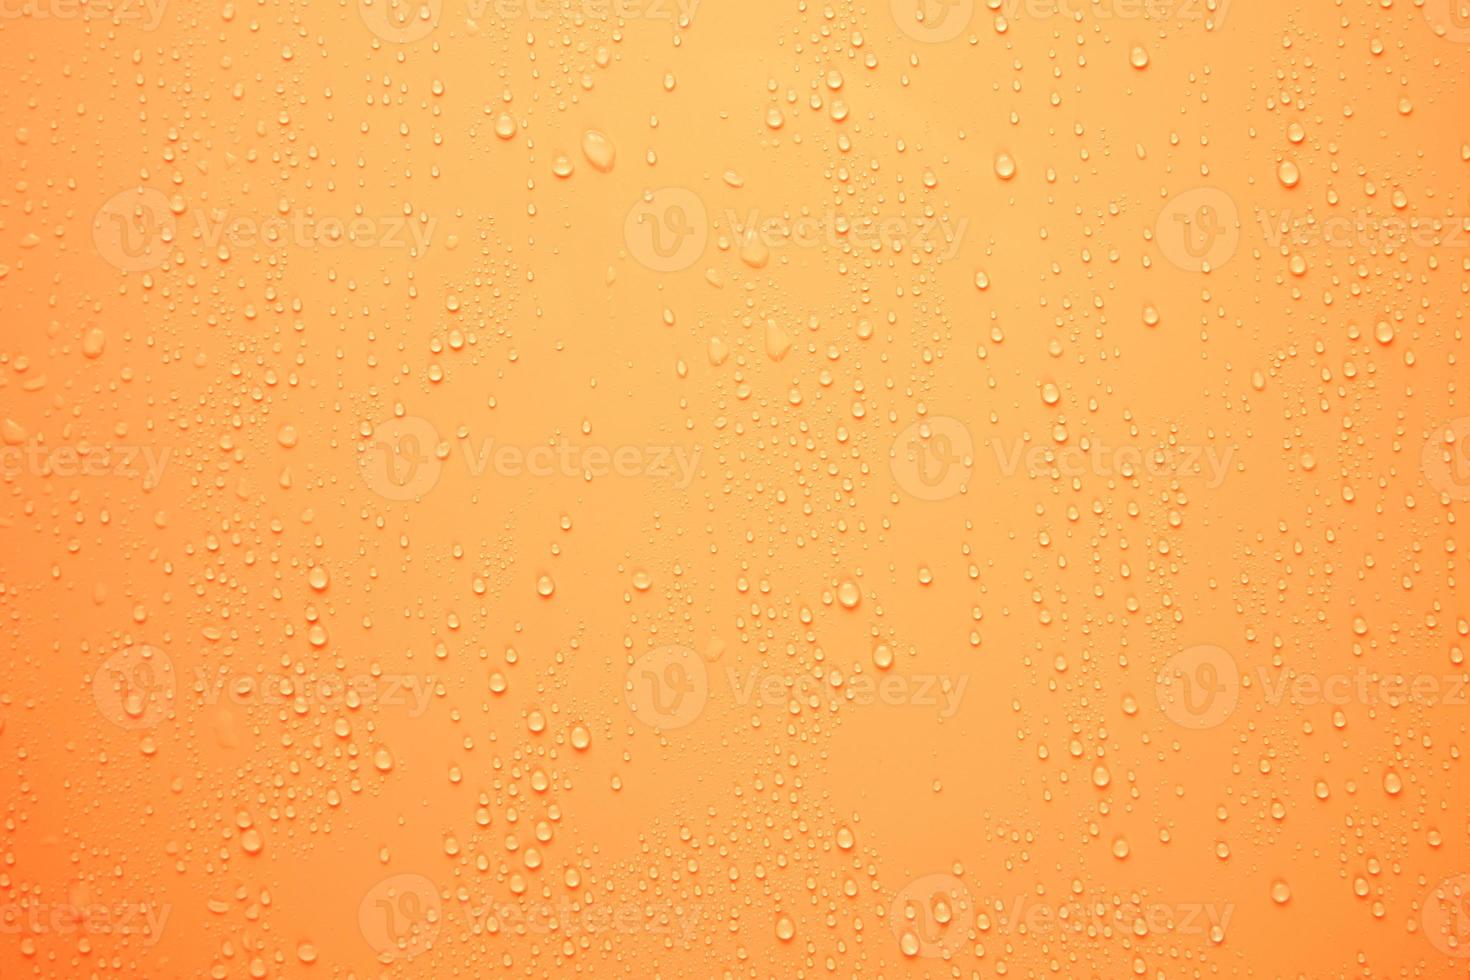 transparante waterdruppels, schone bubbels foto